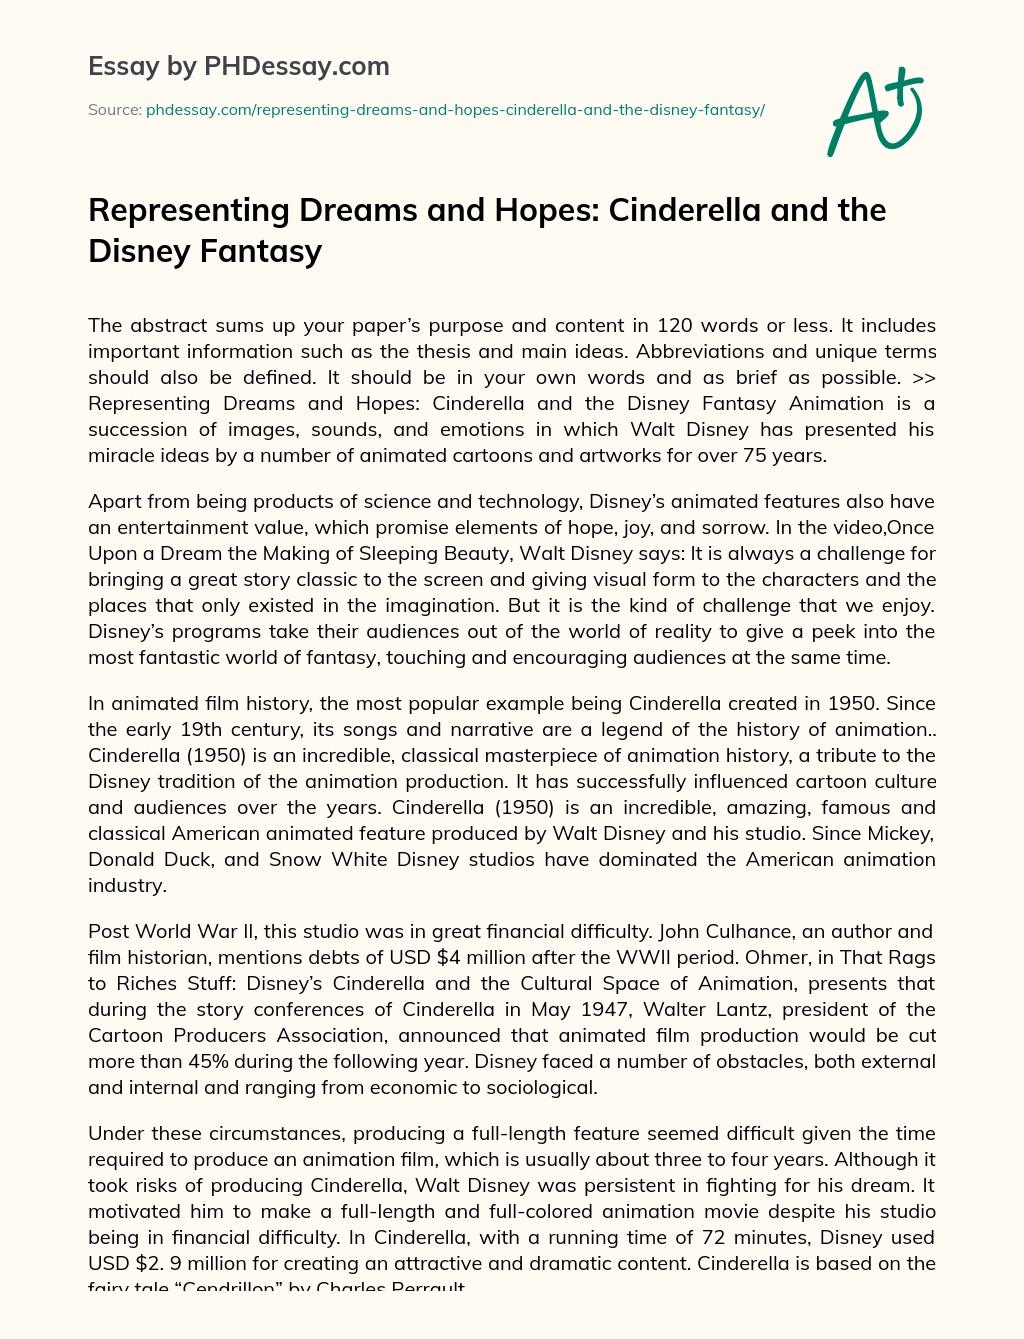 Representing Dreams and Hopes: Cinderella and the Disney Fantasy essay